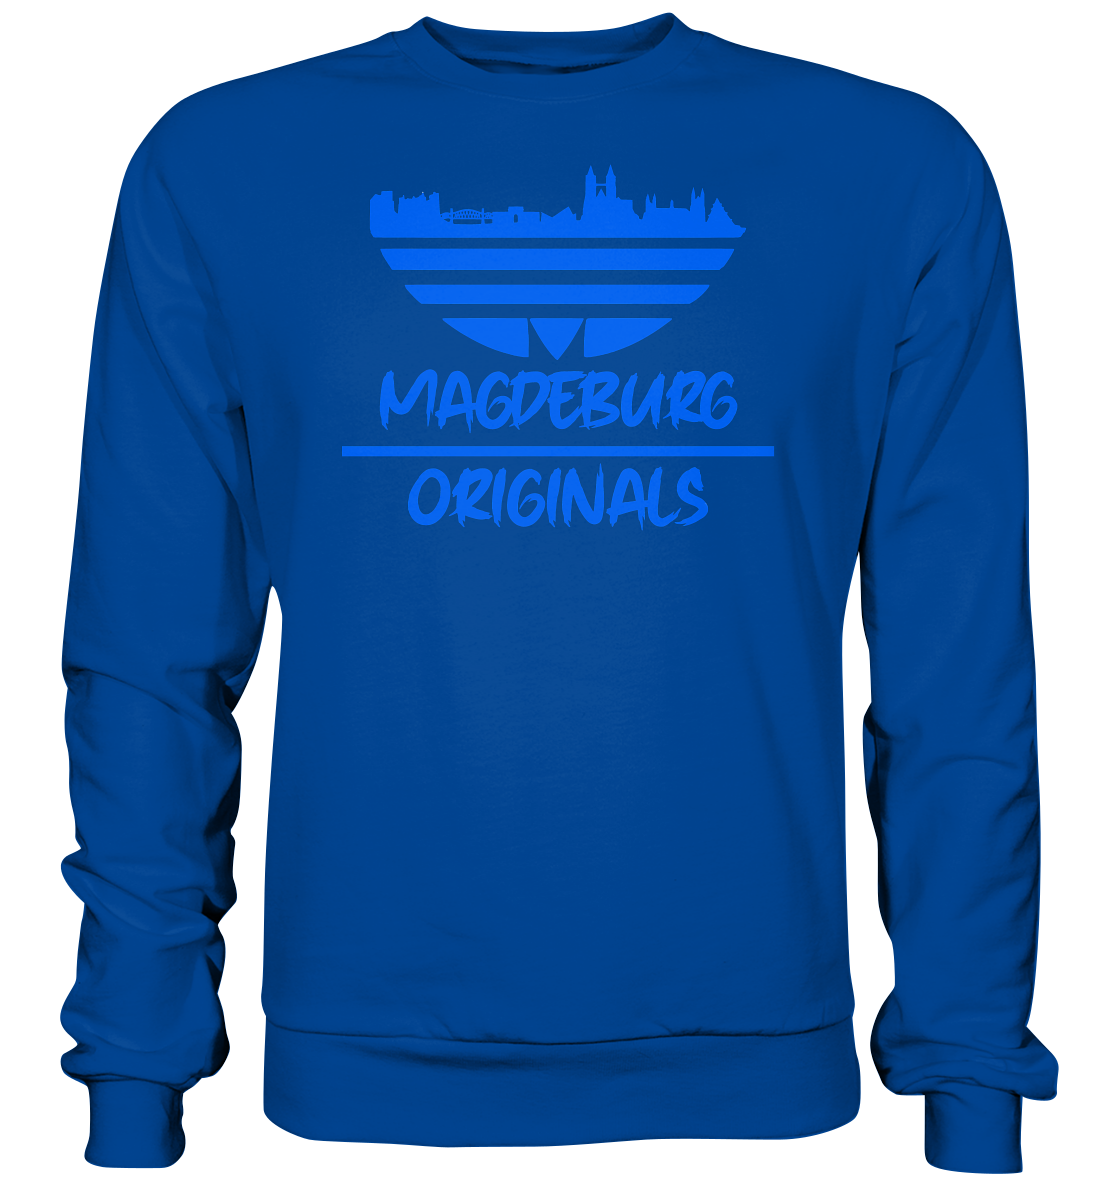 Magdeburg Originals - Sweatshirt